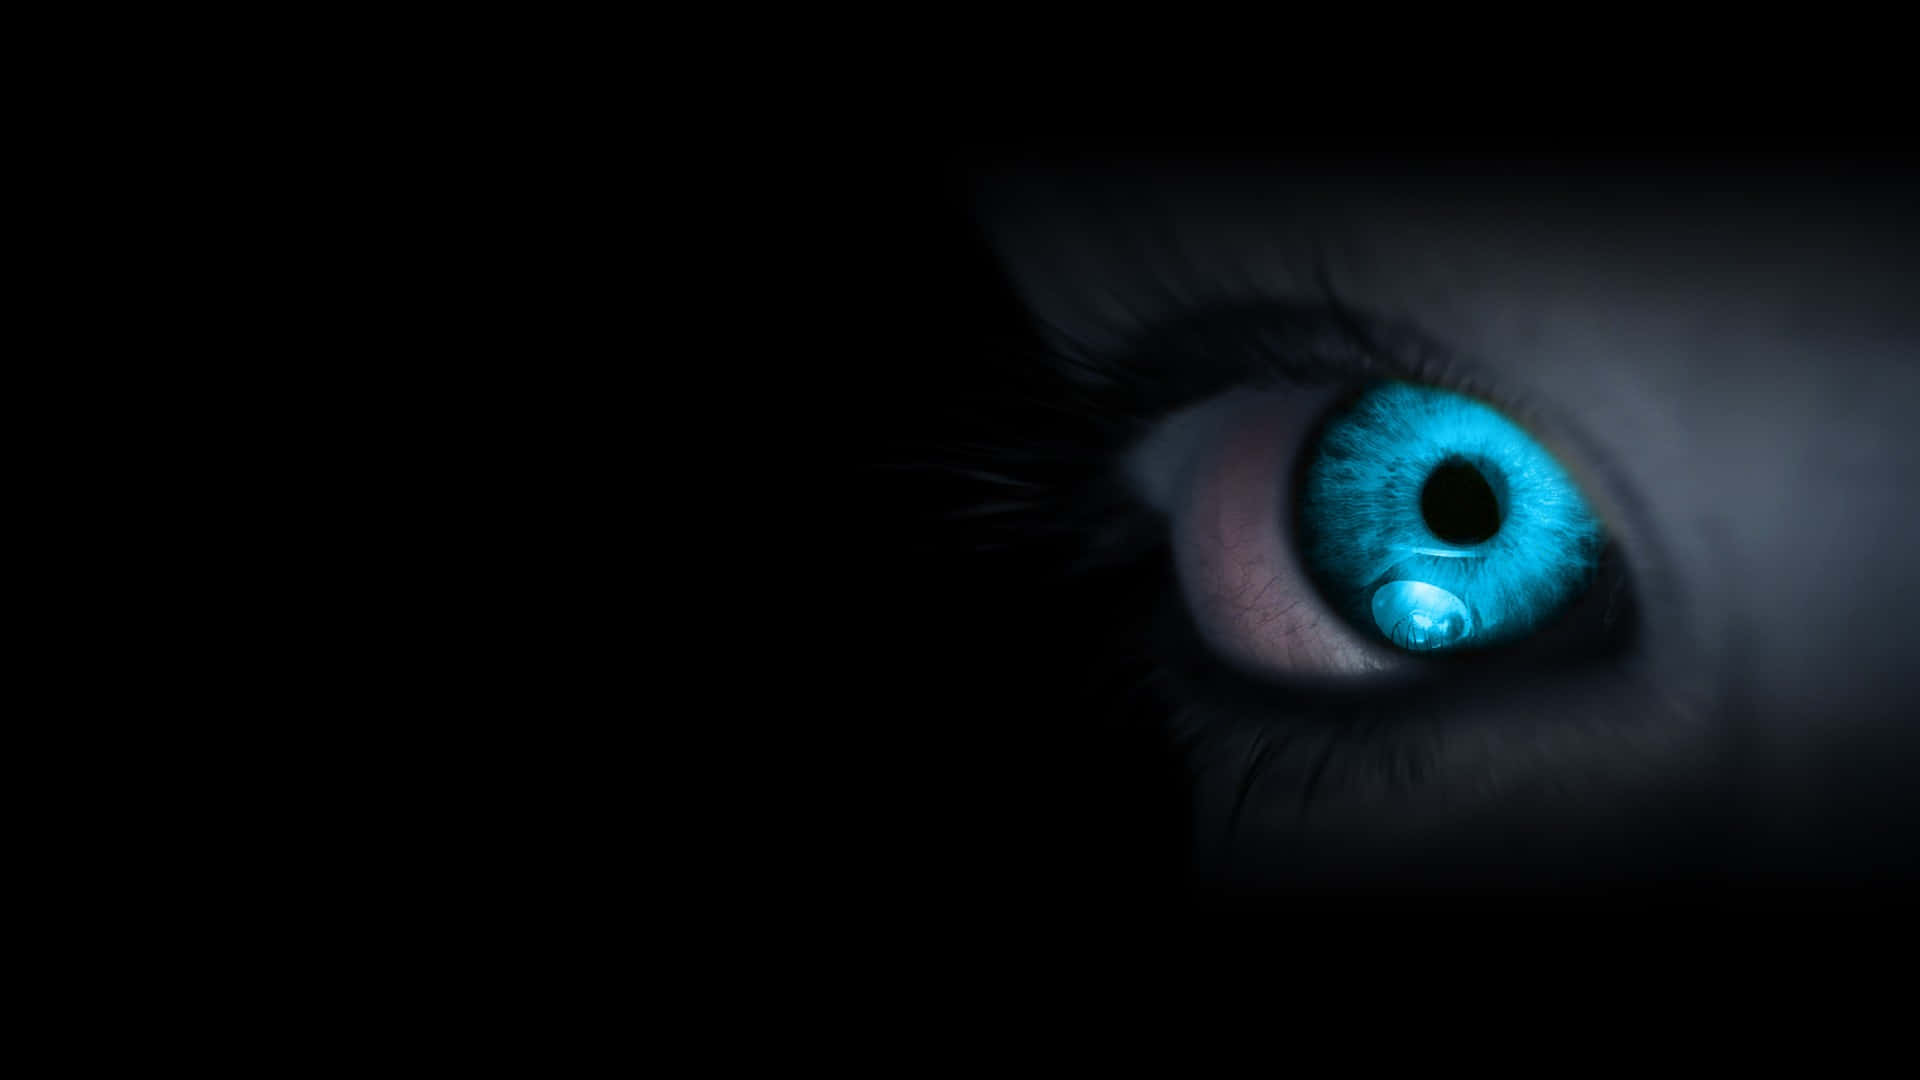 Caption: Hypnotic Blue Eye Closeup Wallpaper